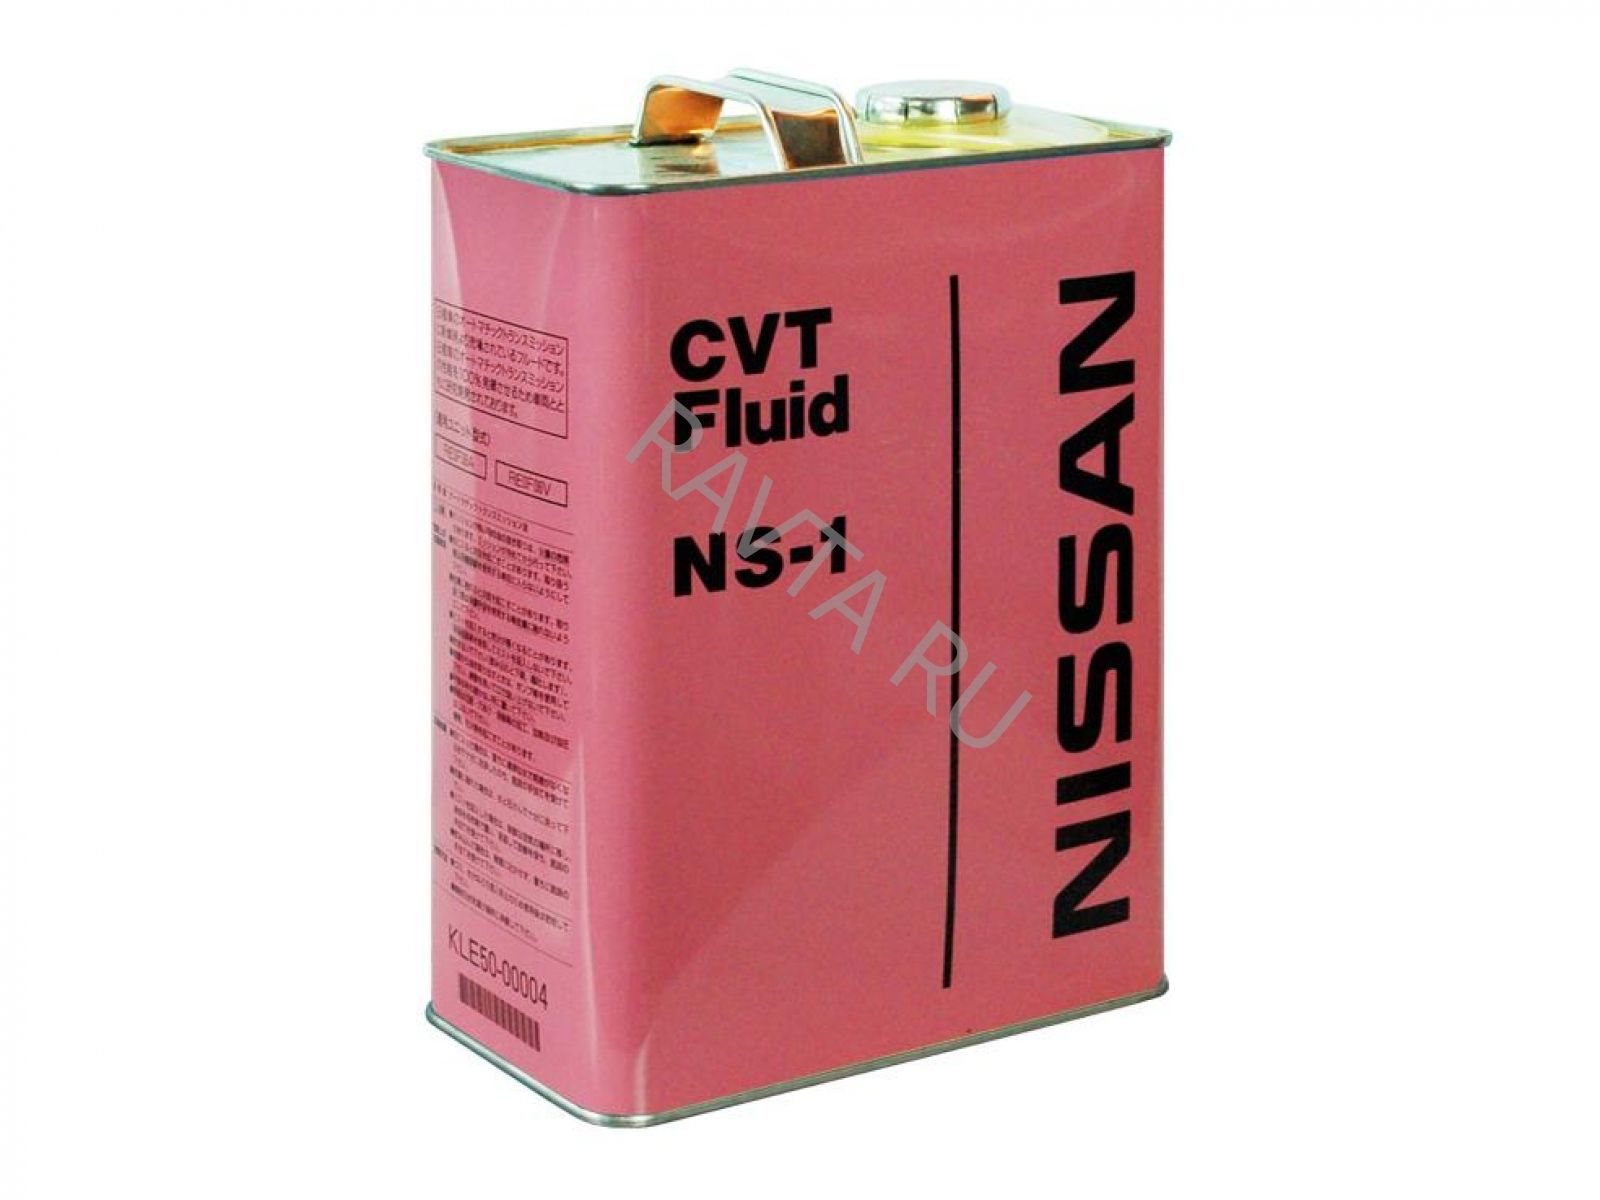 Nissan cvt fluid ns 1 аналоги